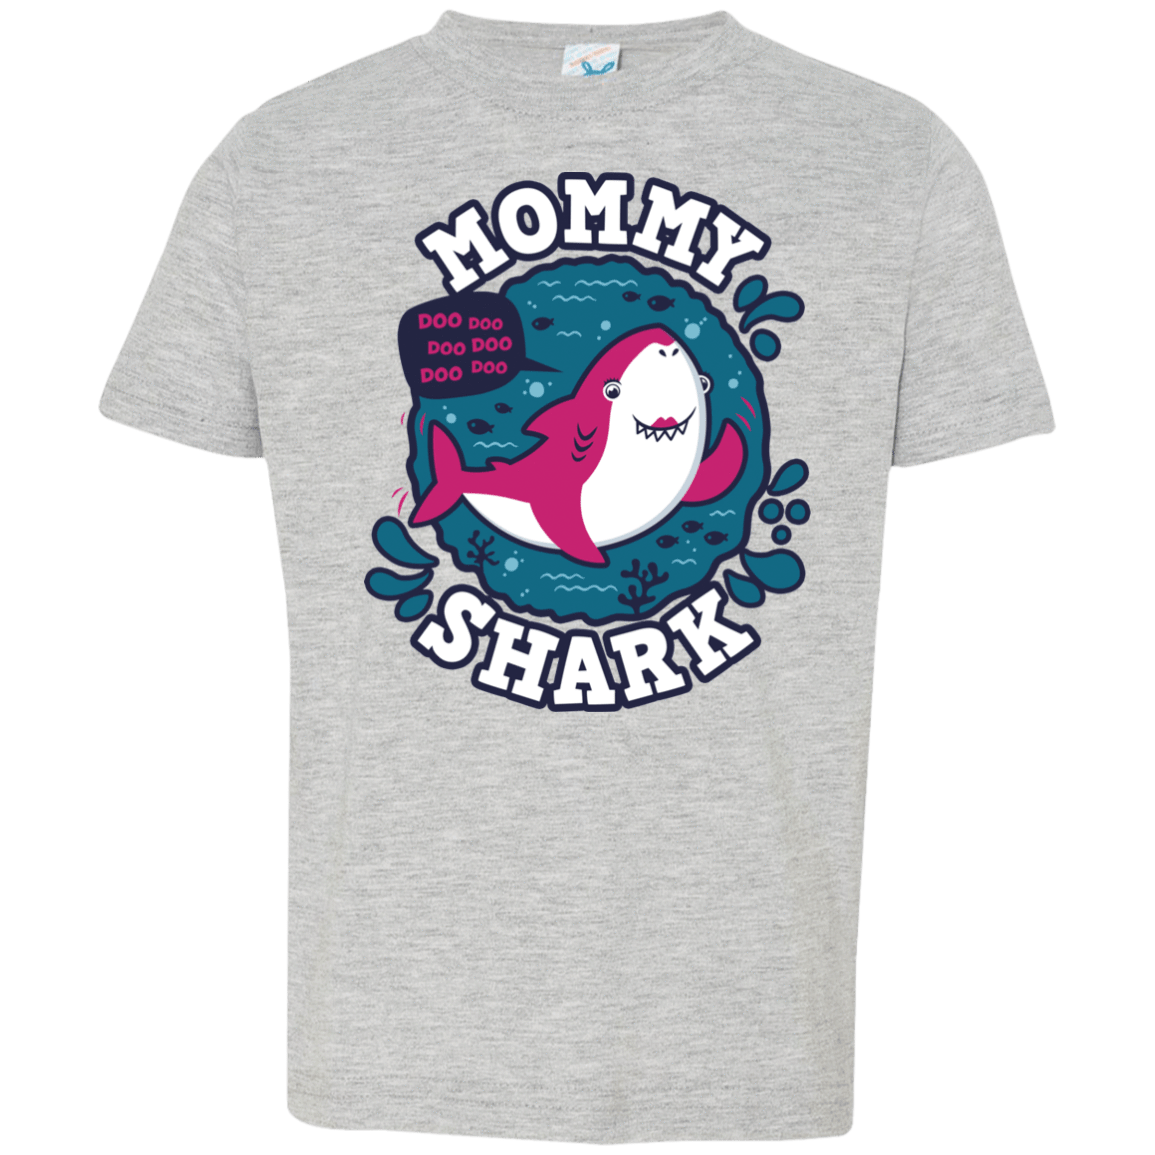 T-Shirts Heather Grey / 2T Shark Family trazo - Mommy Toddler Premium T-Shirt